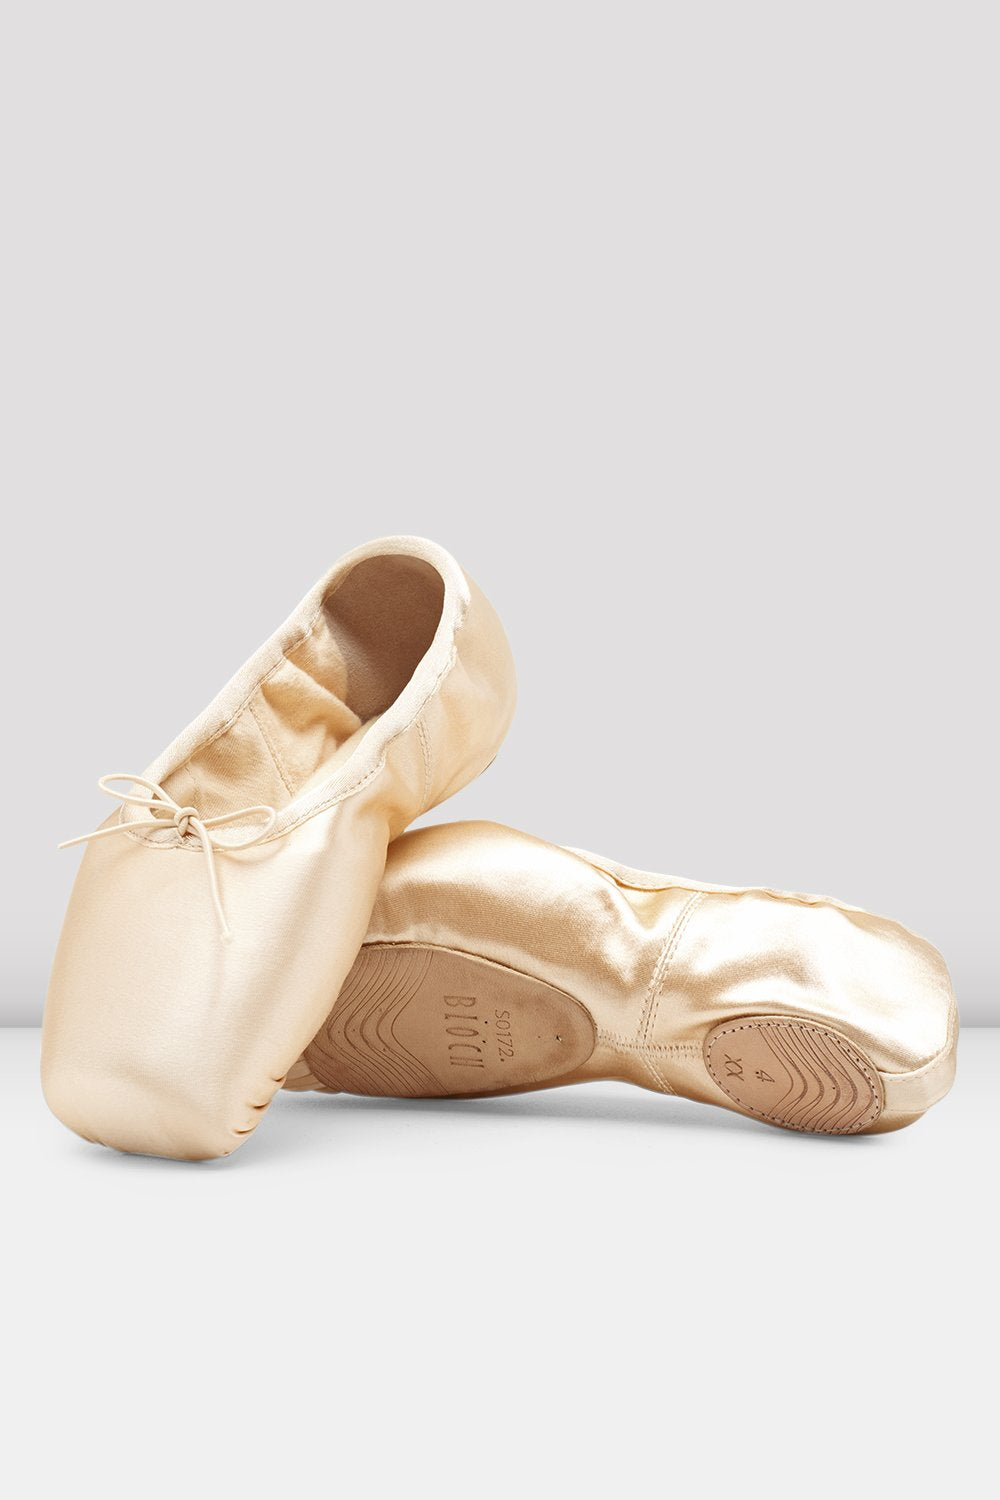 Bloch Unisex Covert Ballet Shoe Elastic